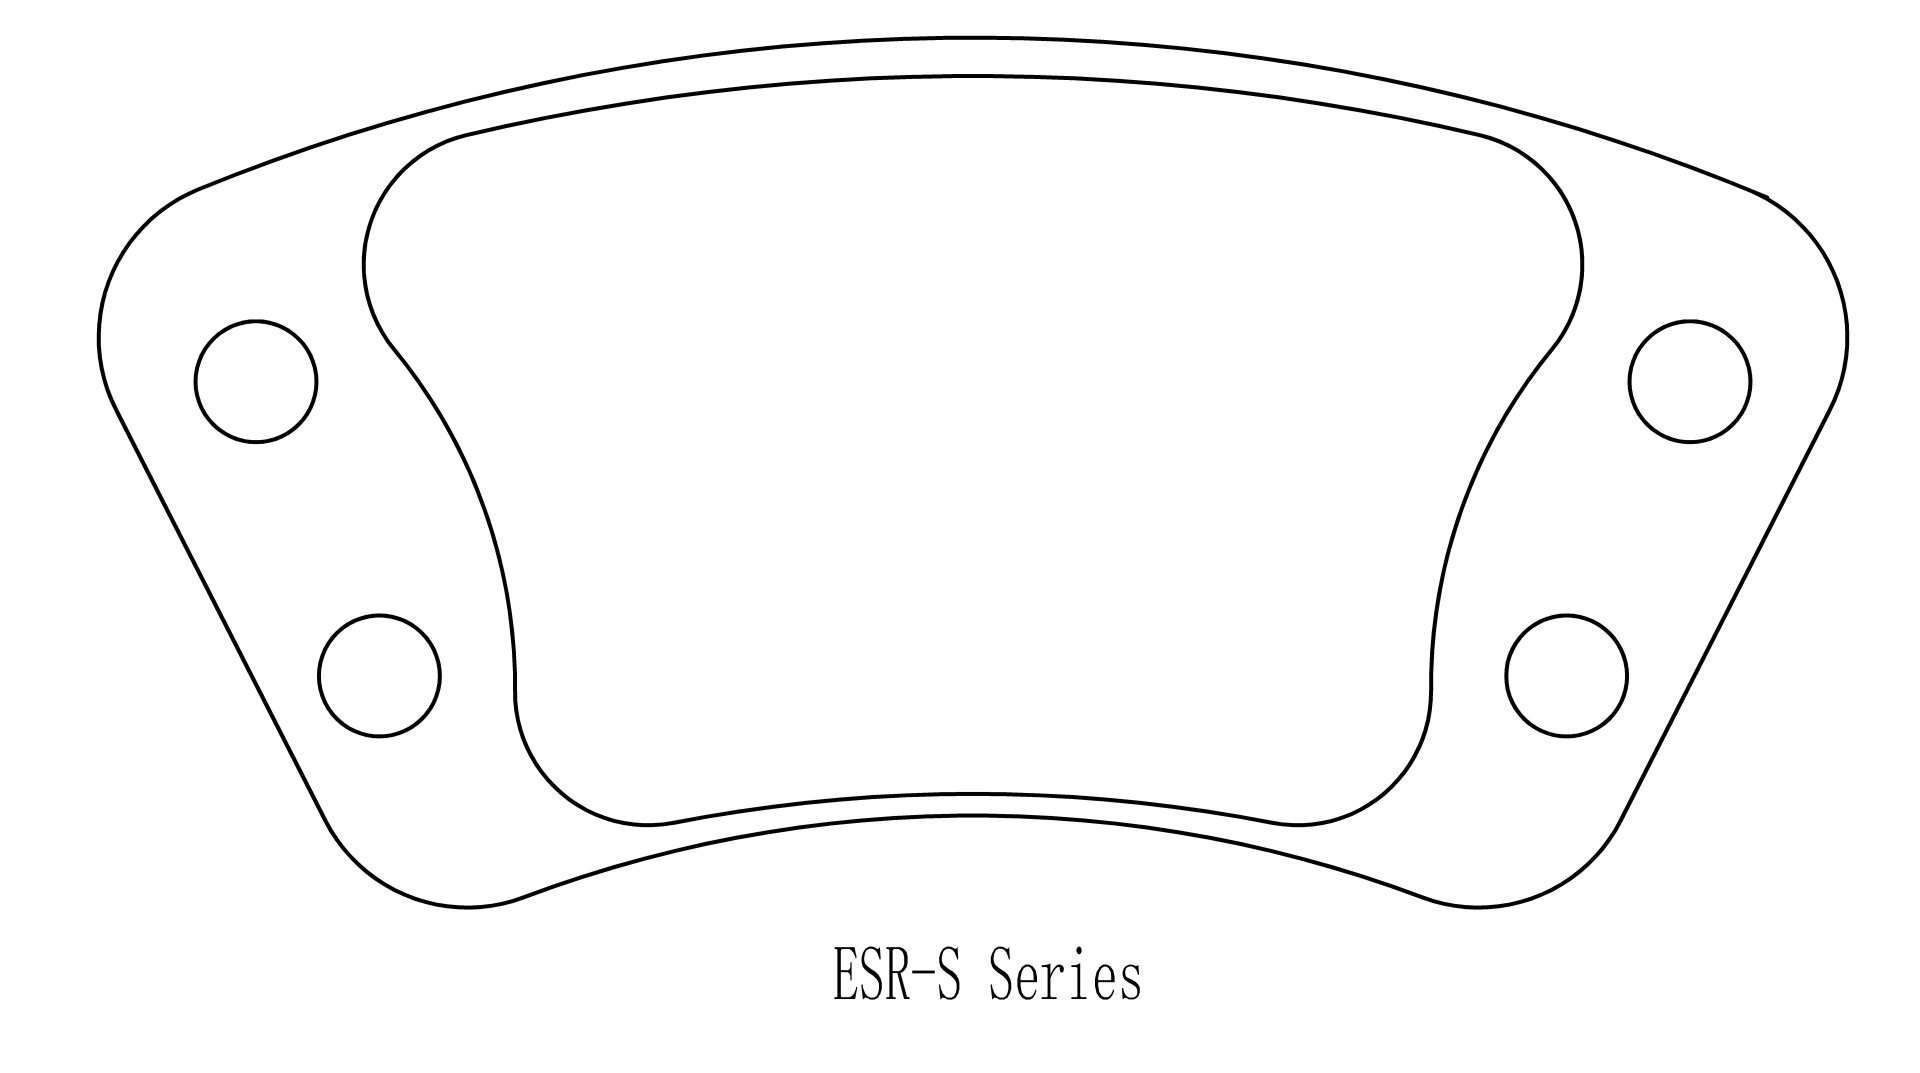 ESR-S series